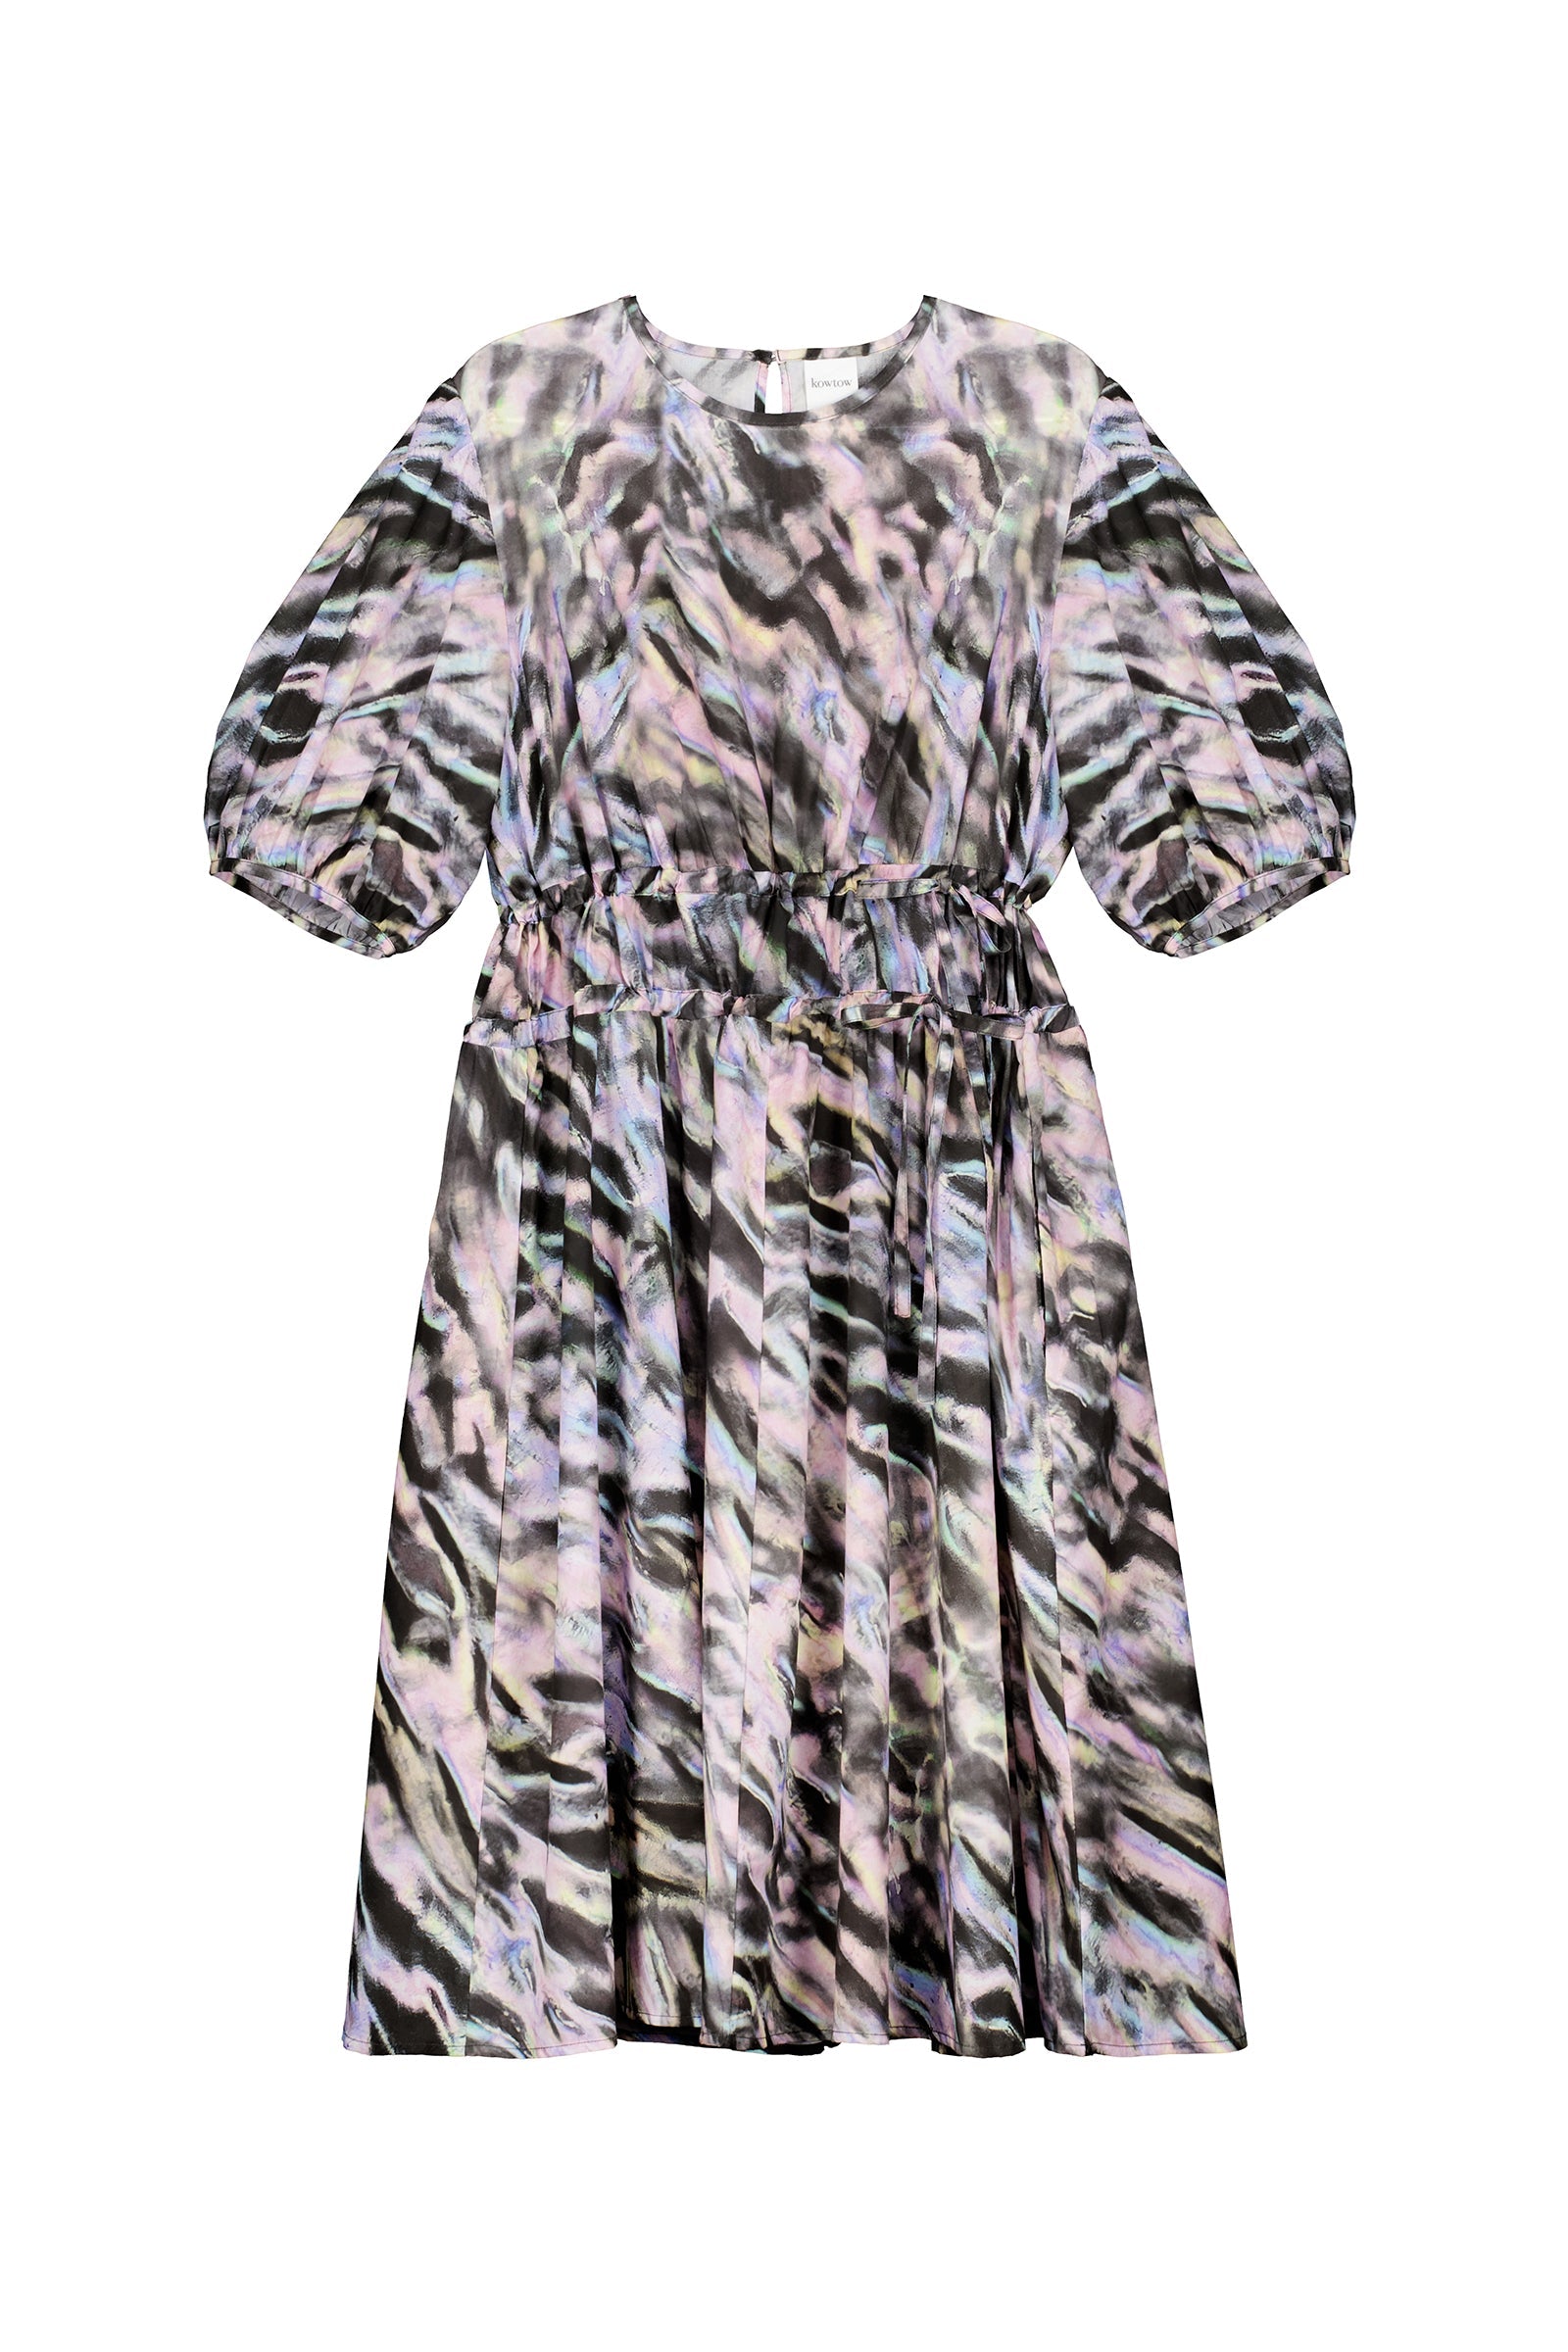 Kowtow Celeste Dress - Iridescent | Knee Length Dress | Kowtow Australia